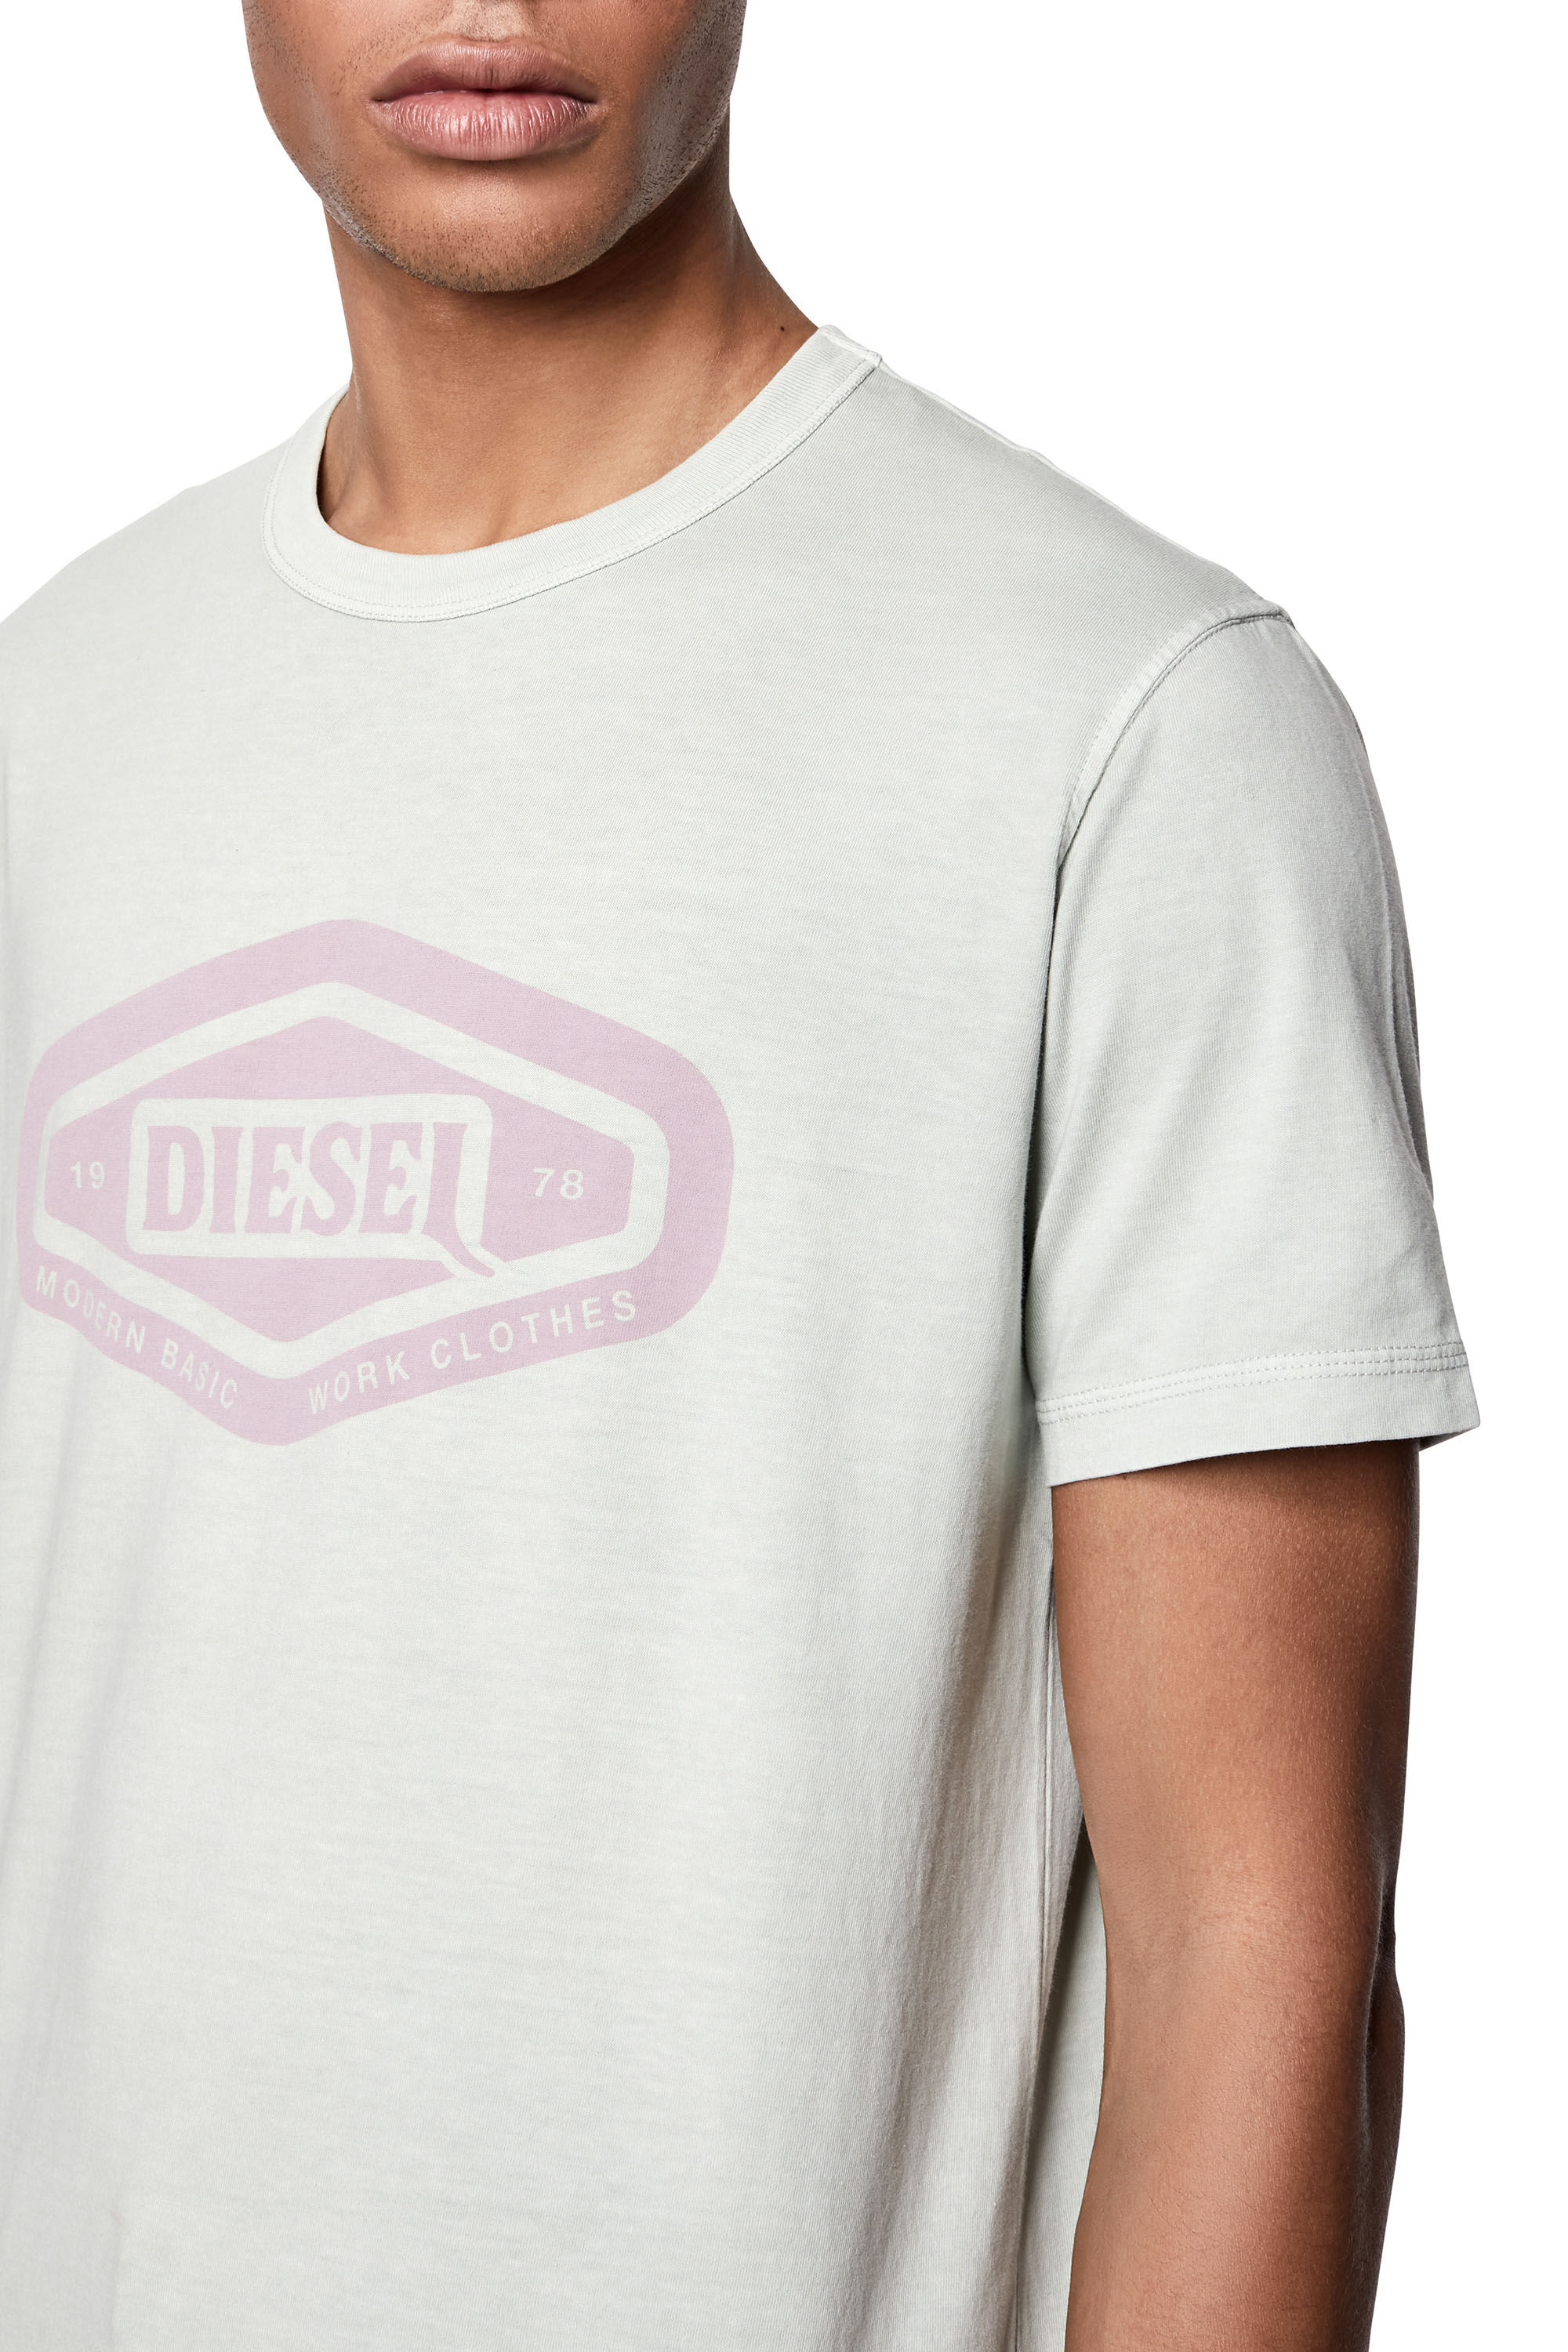 wazig apotheker Omhoog gaan T-DIEGOR-D1 Man: Fashion Show T-shirt with logo print | Diesel